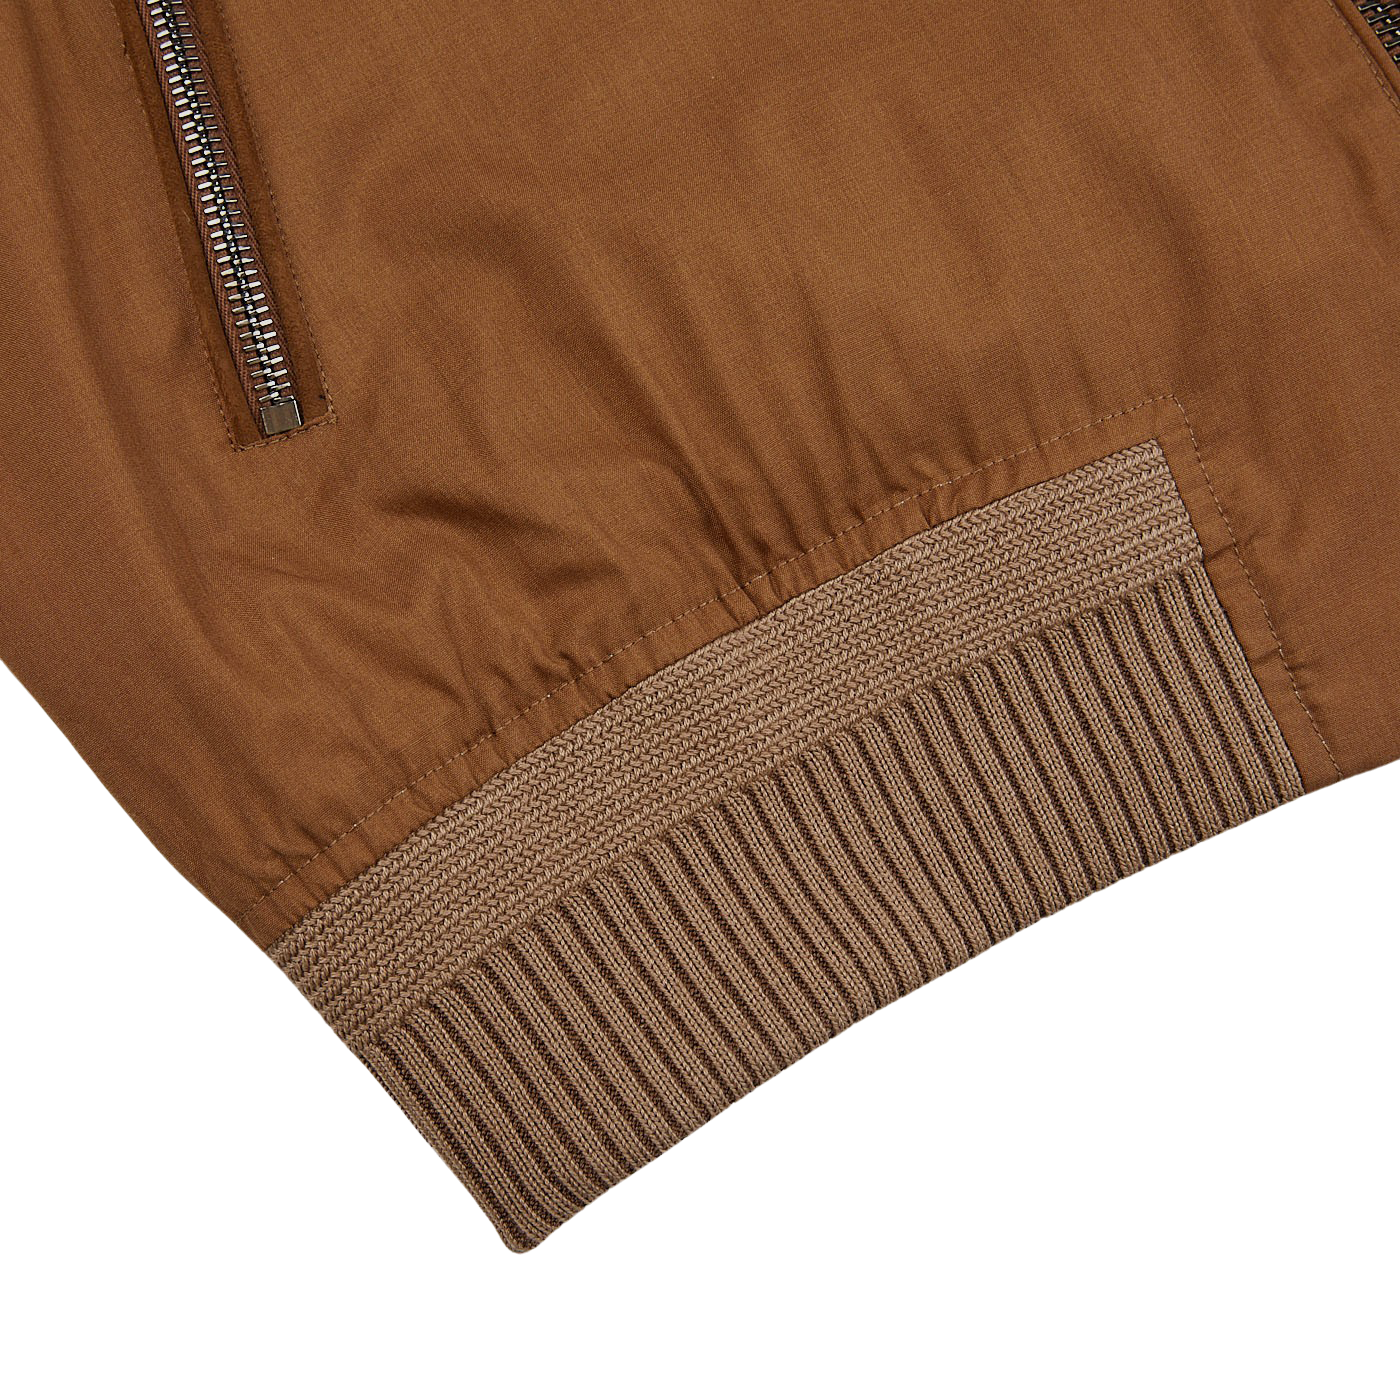 The back of a Tobacco Reversible Loro Piana Wool Silk Blouson jacket by Manto.